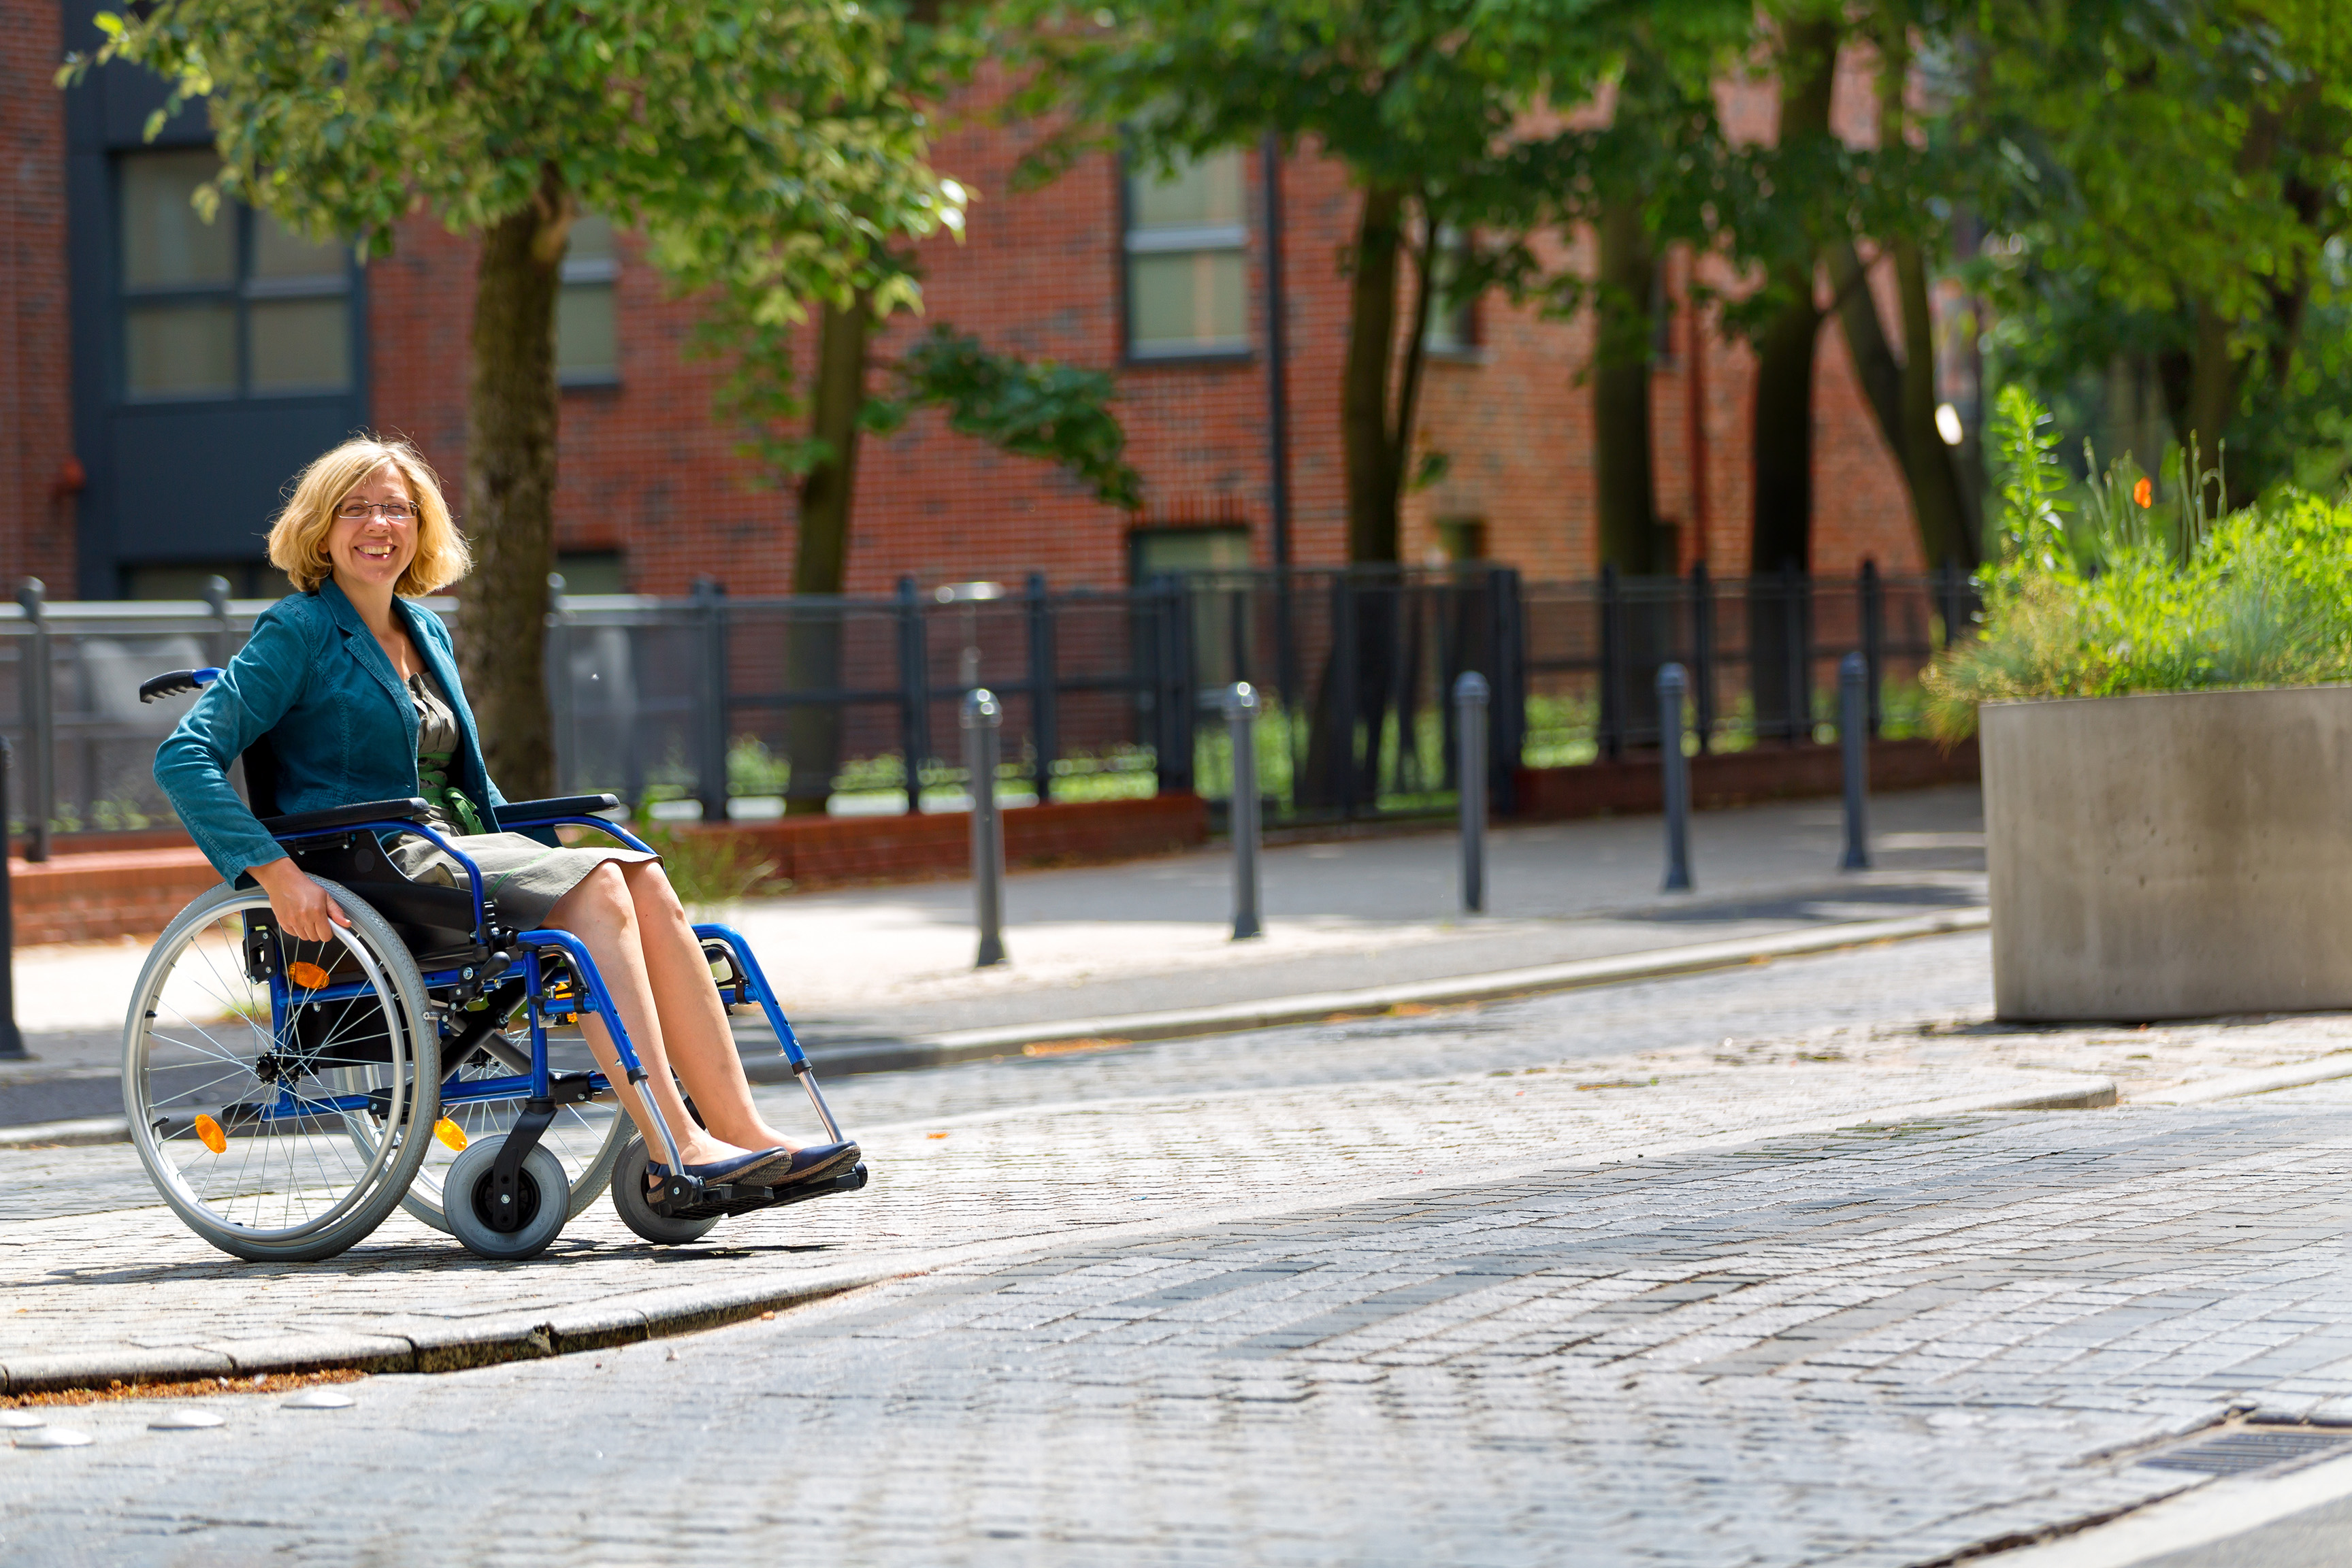 Women in Wheelchair in a street environment